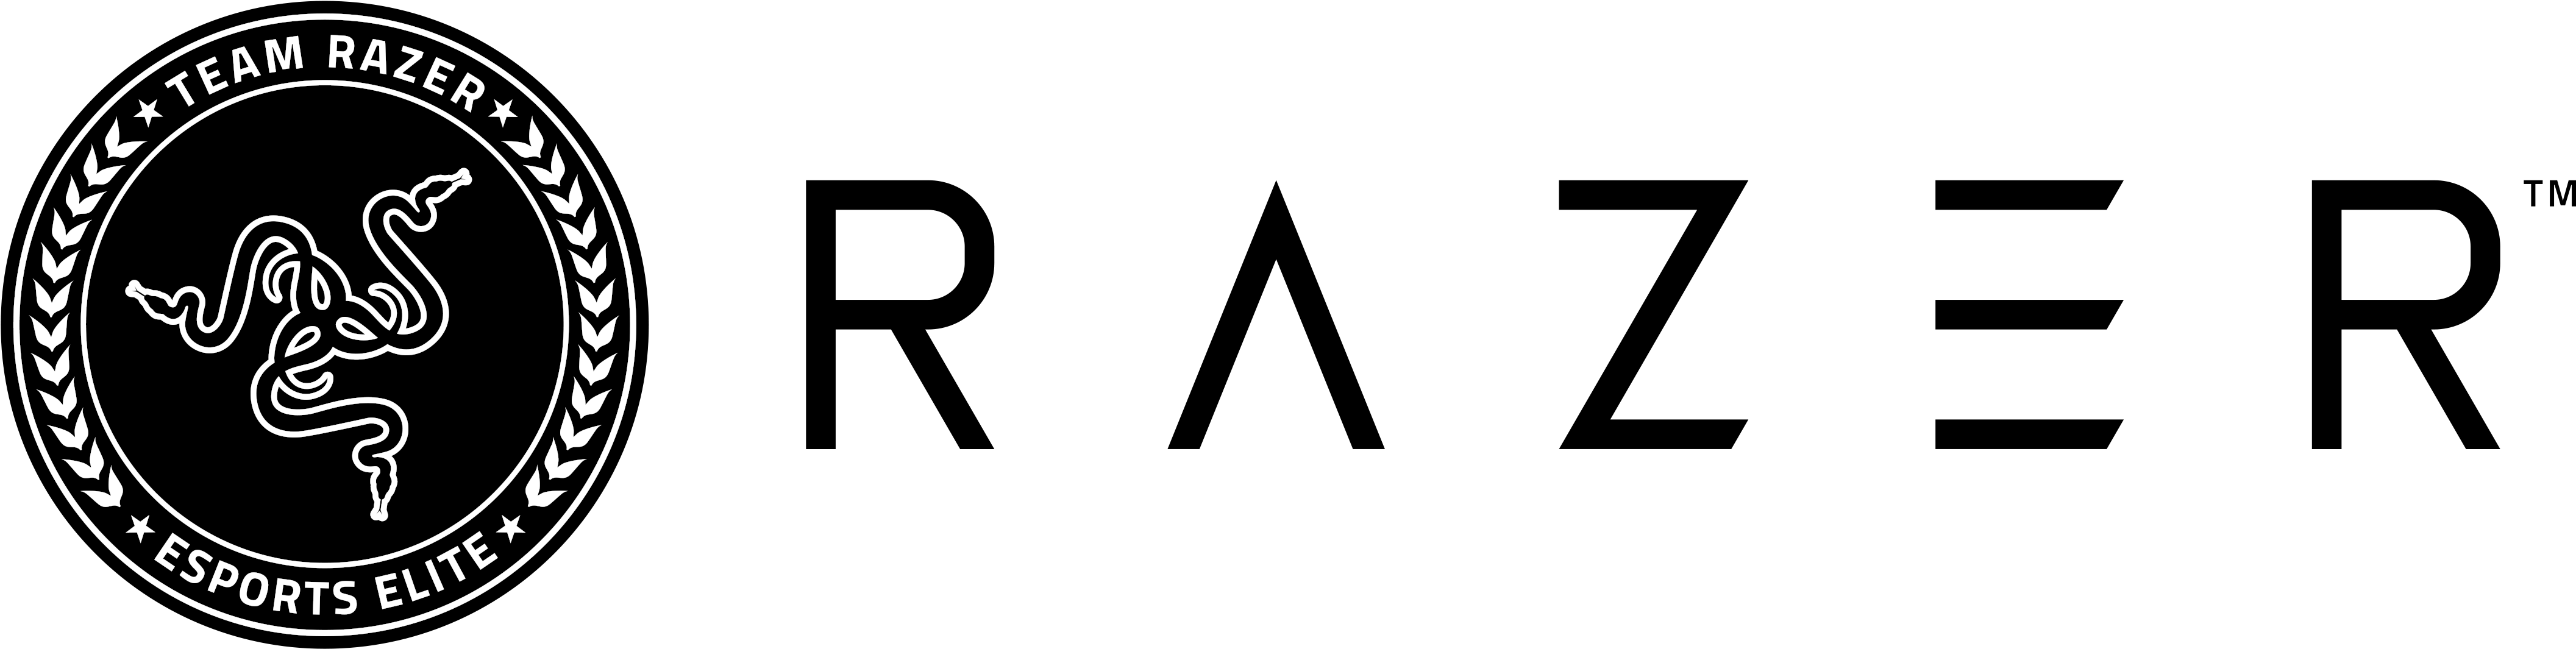 Razer Logo PNG HD Quality